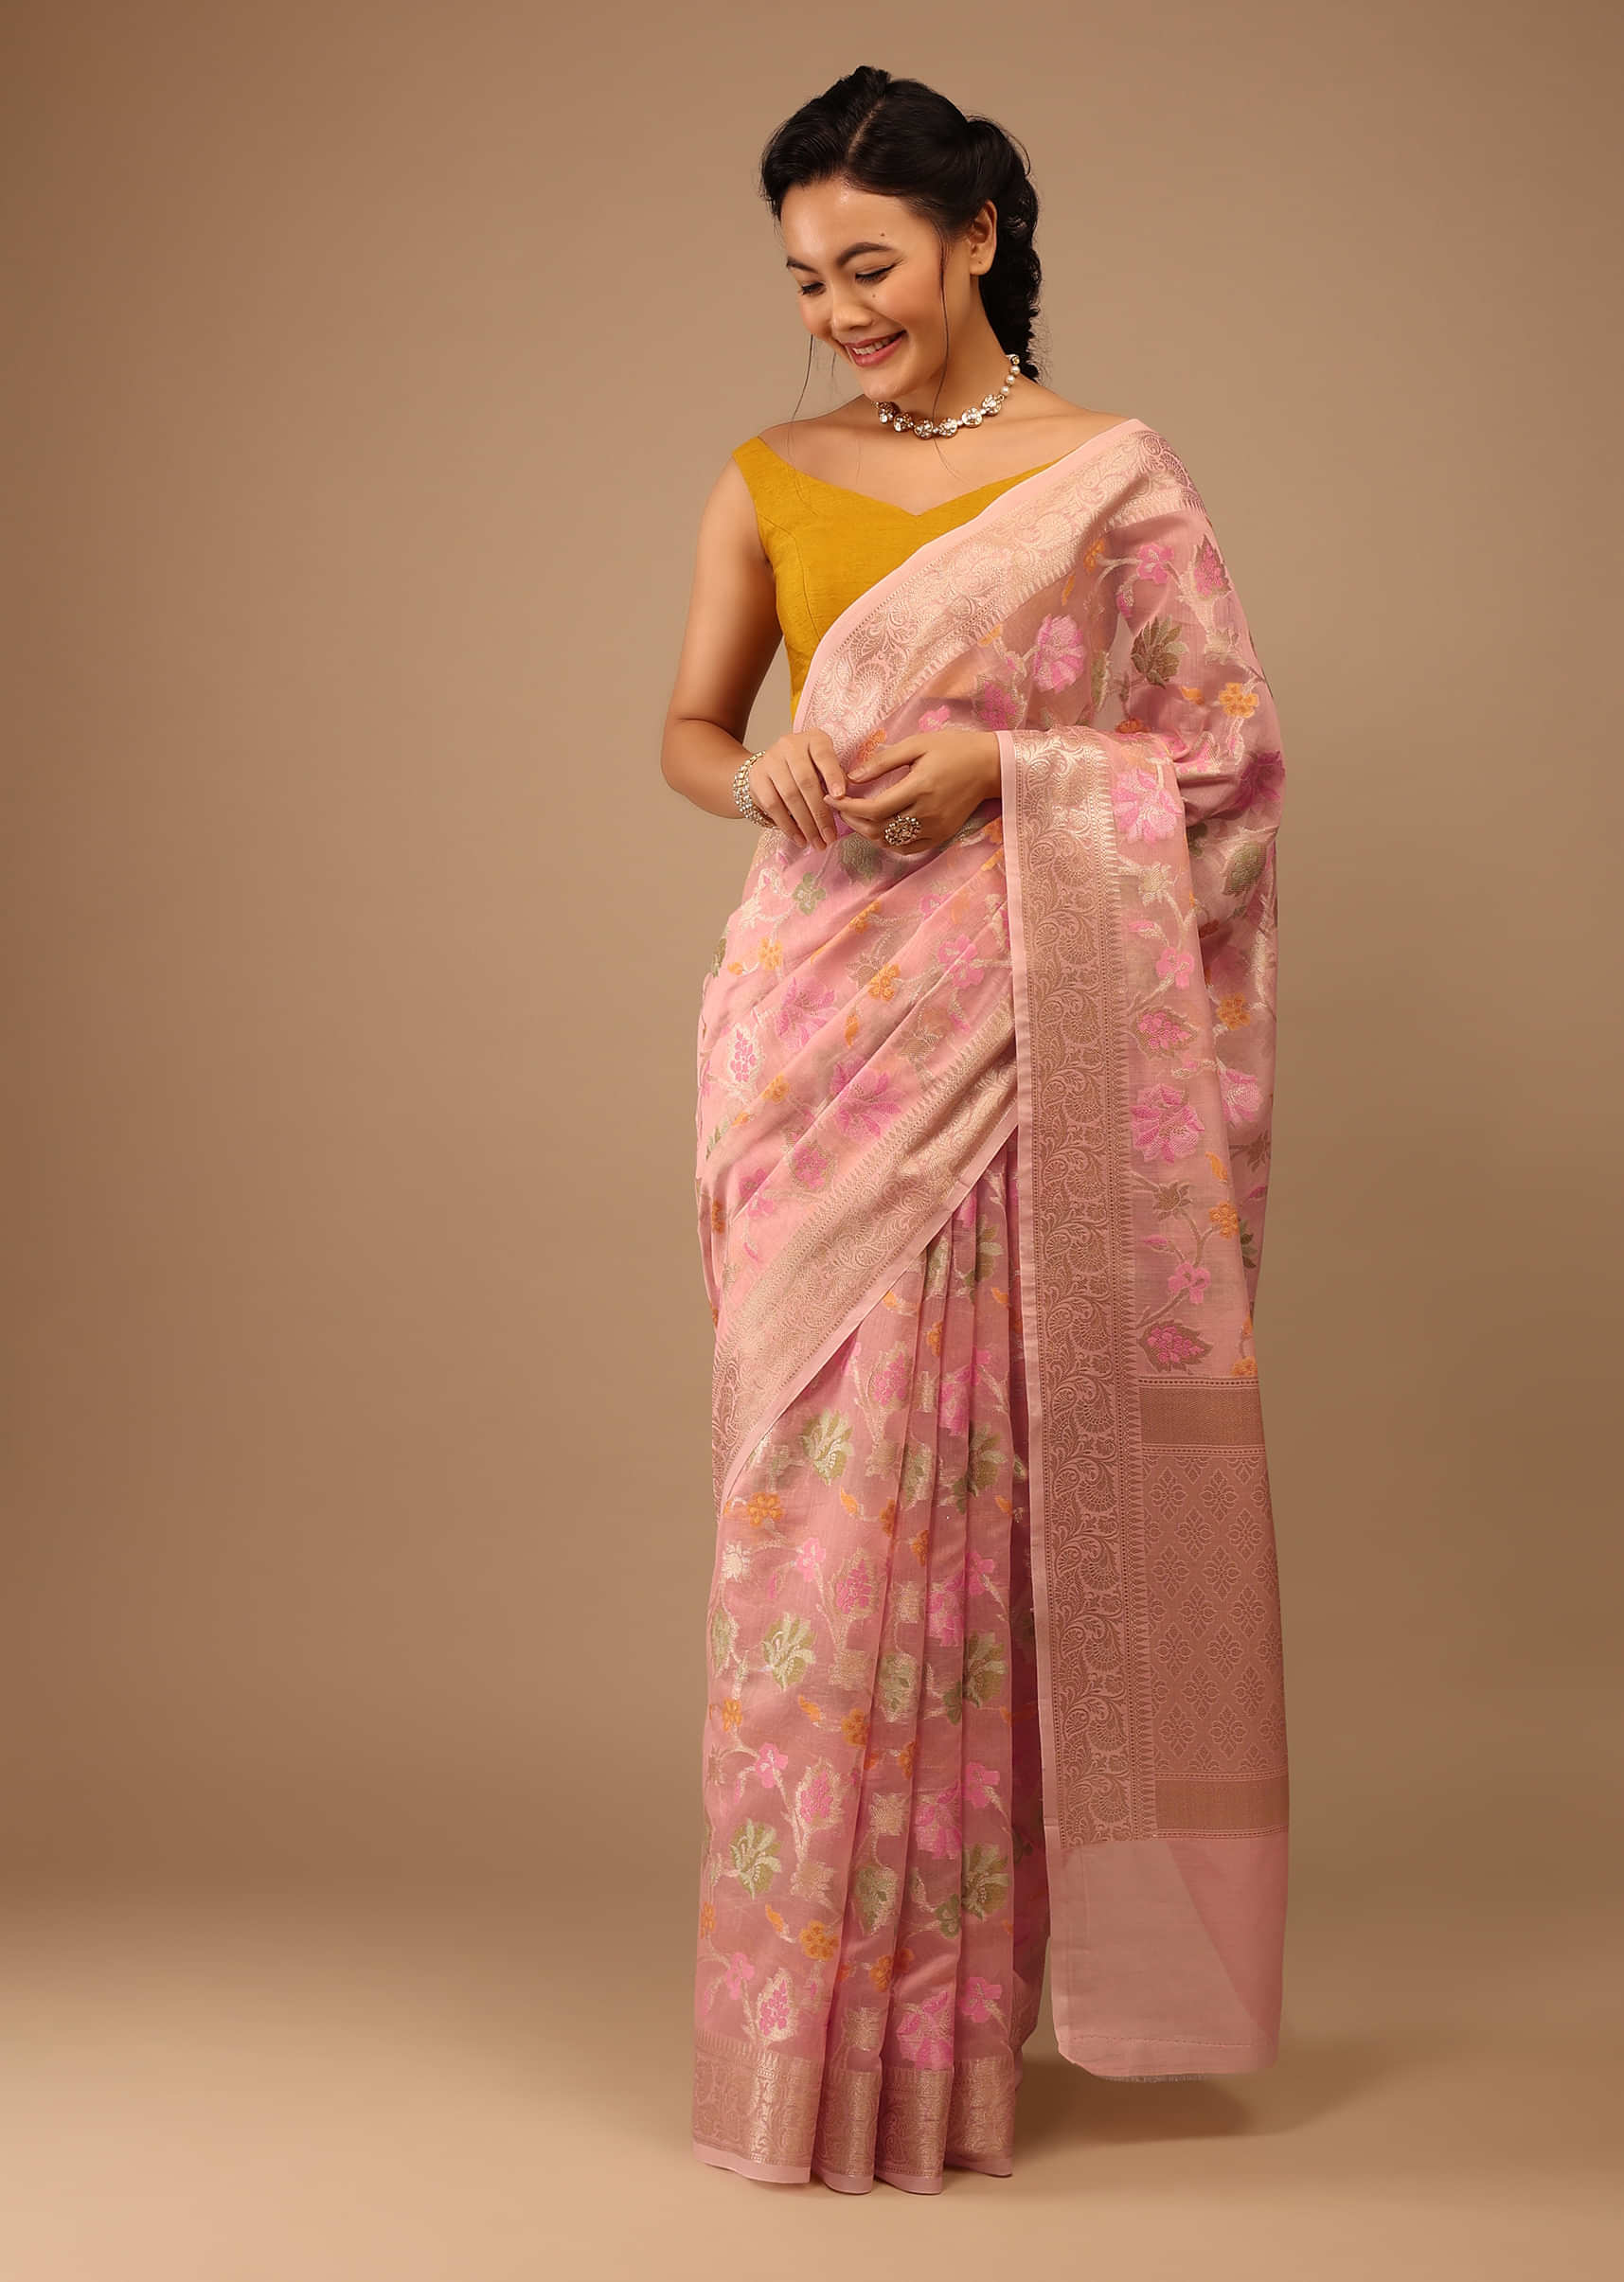 Icing Pink Saree In Banarsi Chanderi And Pure Handloom Cotton